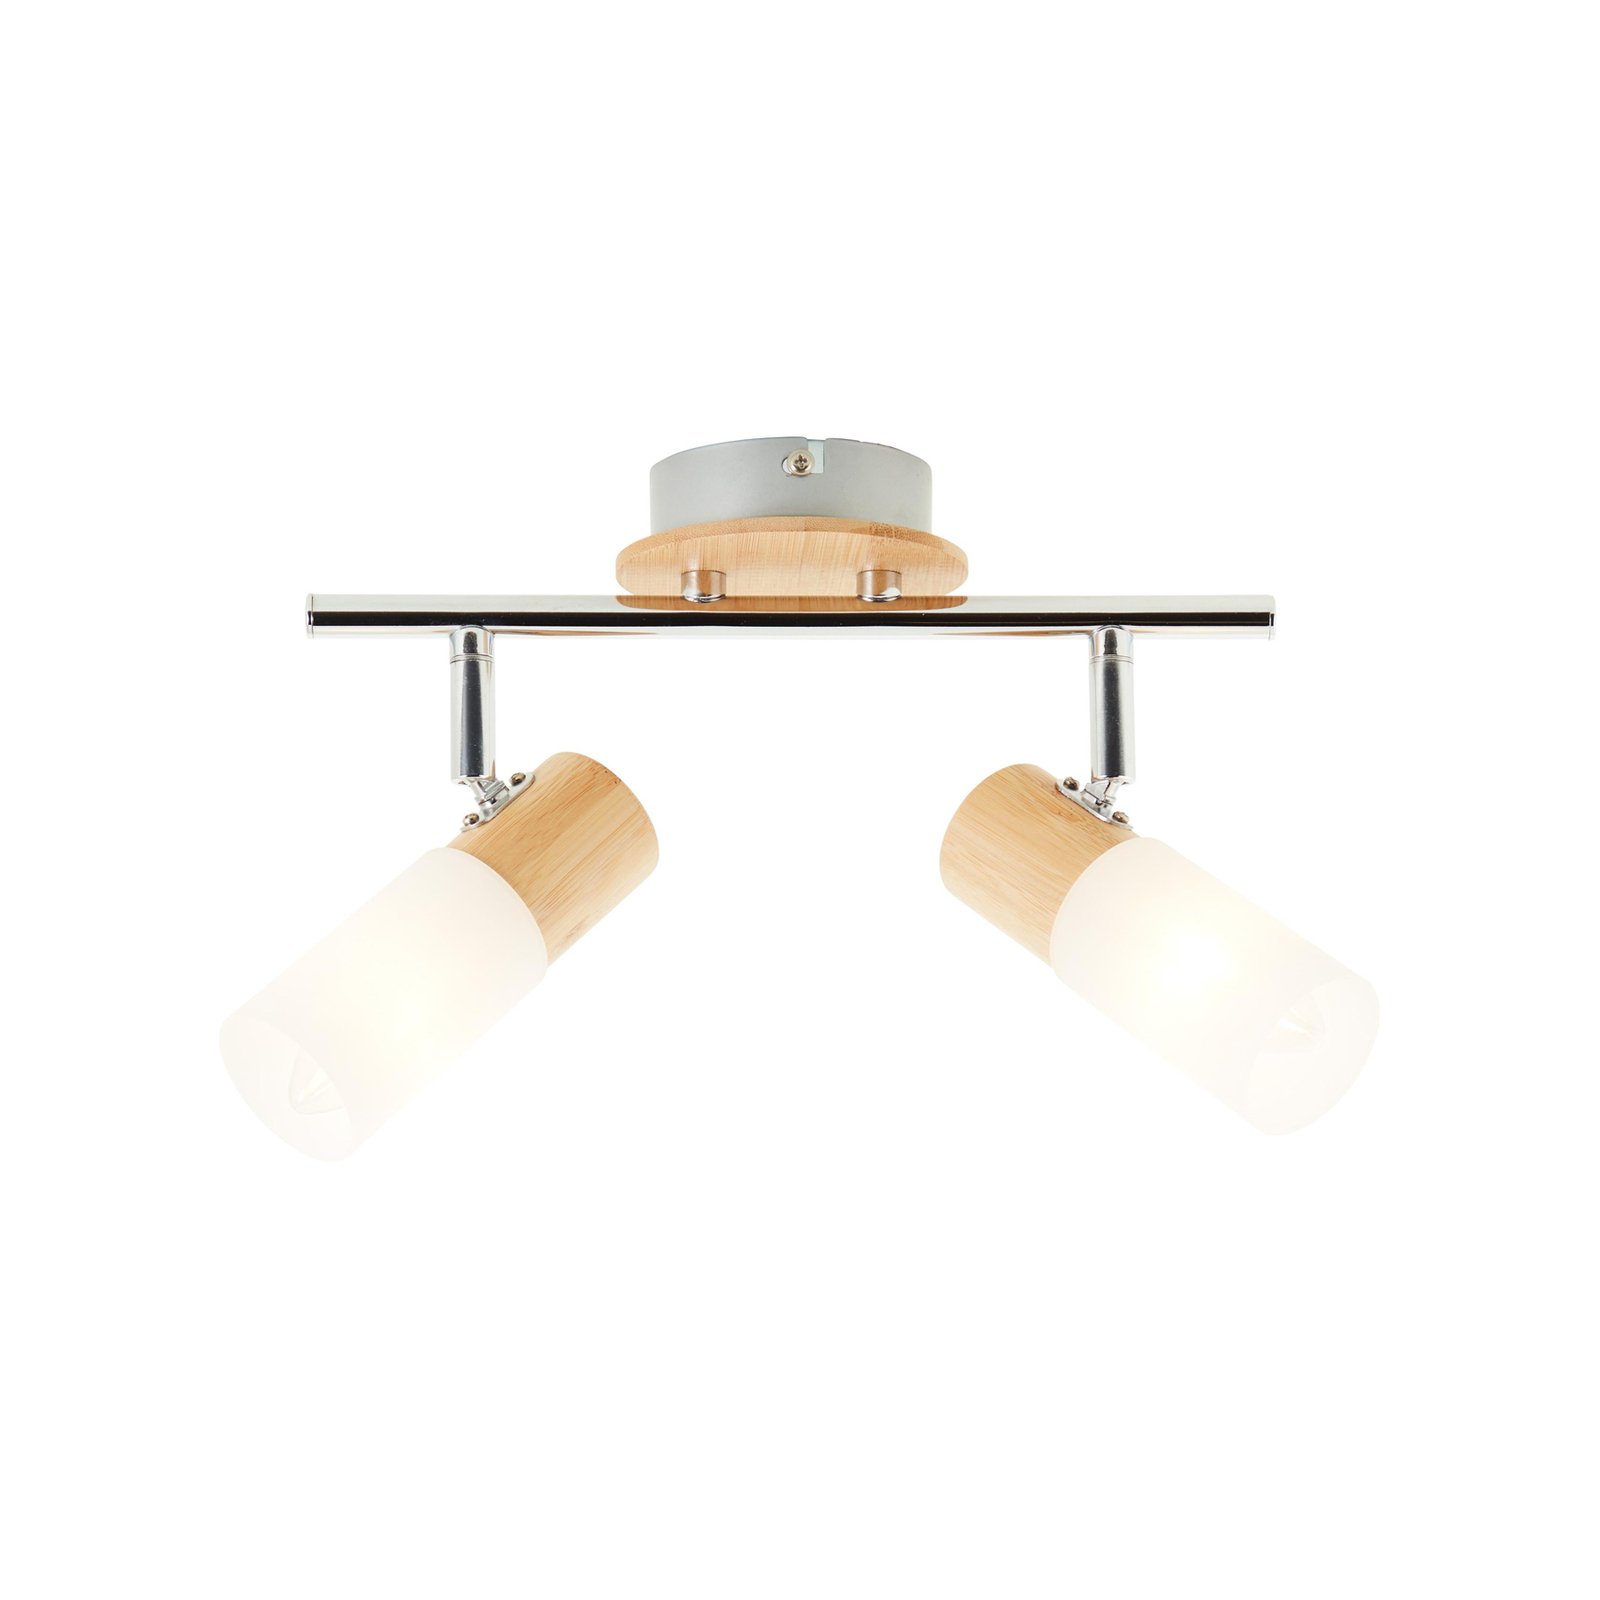 Projetor de teto Babsan, comprimento 27,5 cm, madeira clara, 2 lâmpadas.